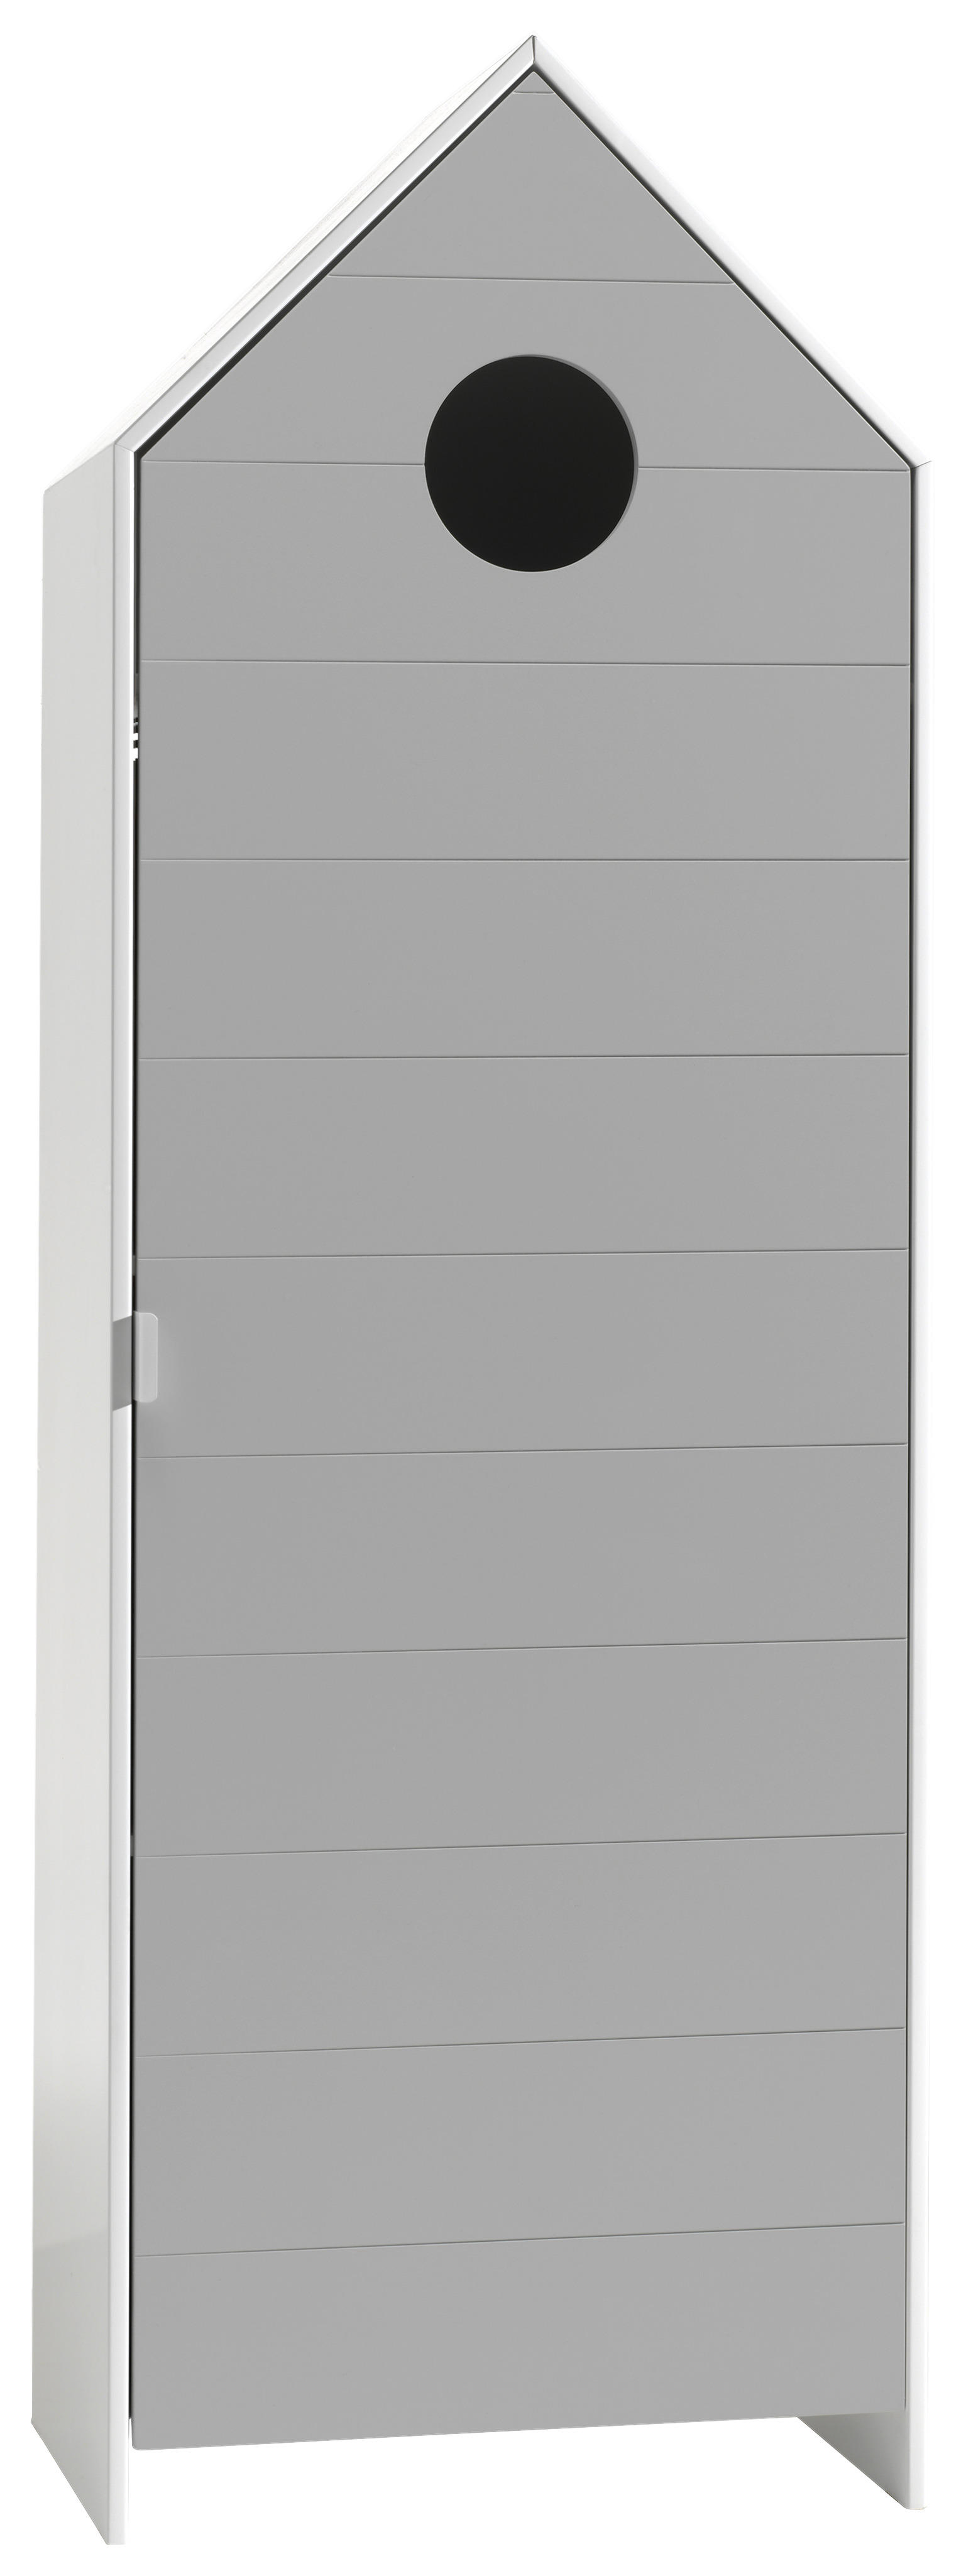 KINDERKLEIDERSCHRANK Grau, Weiß  - Weiß/Grau, MODERN (57,6/171,3/37cm) - MID.YOU